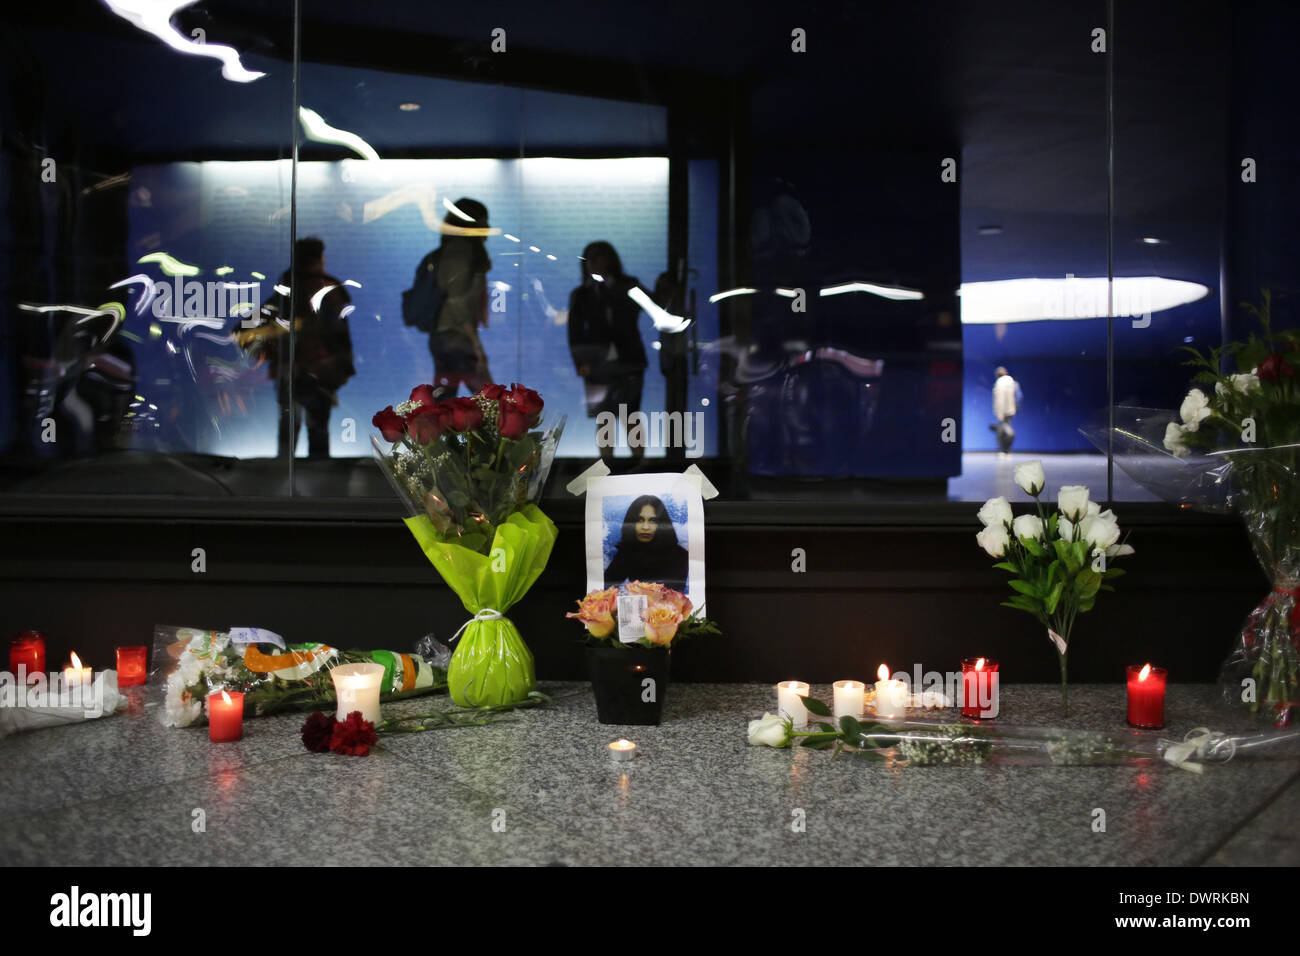 Madrid Bombing Memorial Banque d'image et photos - Alamy